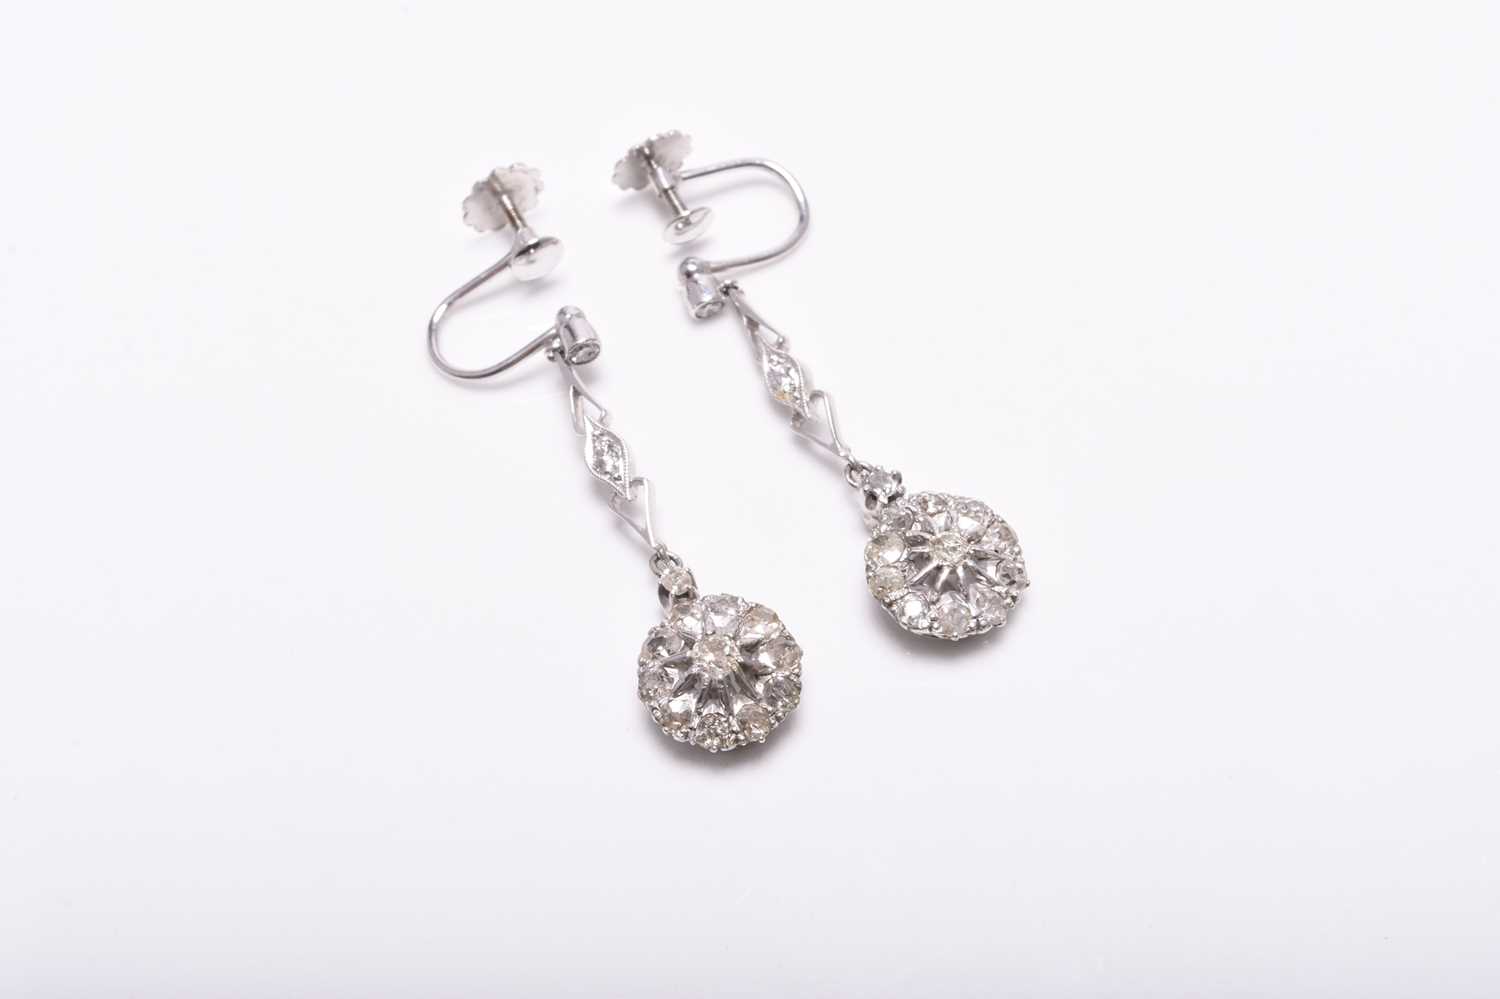 A pair of late 19th century style diamond ear pendants